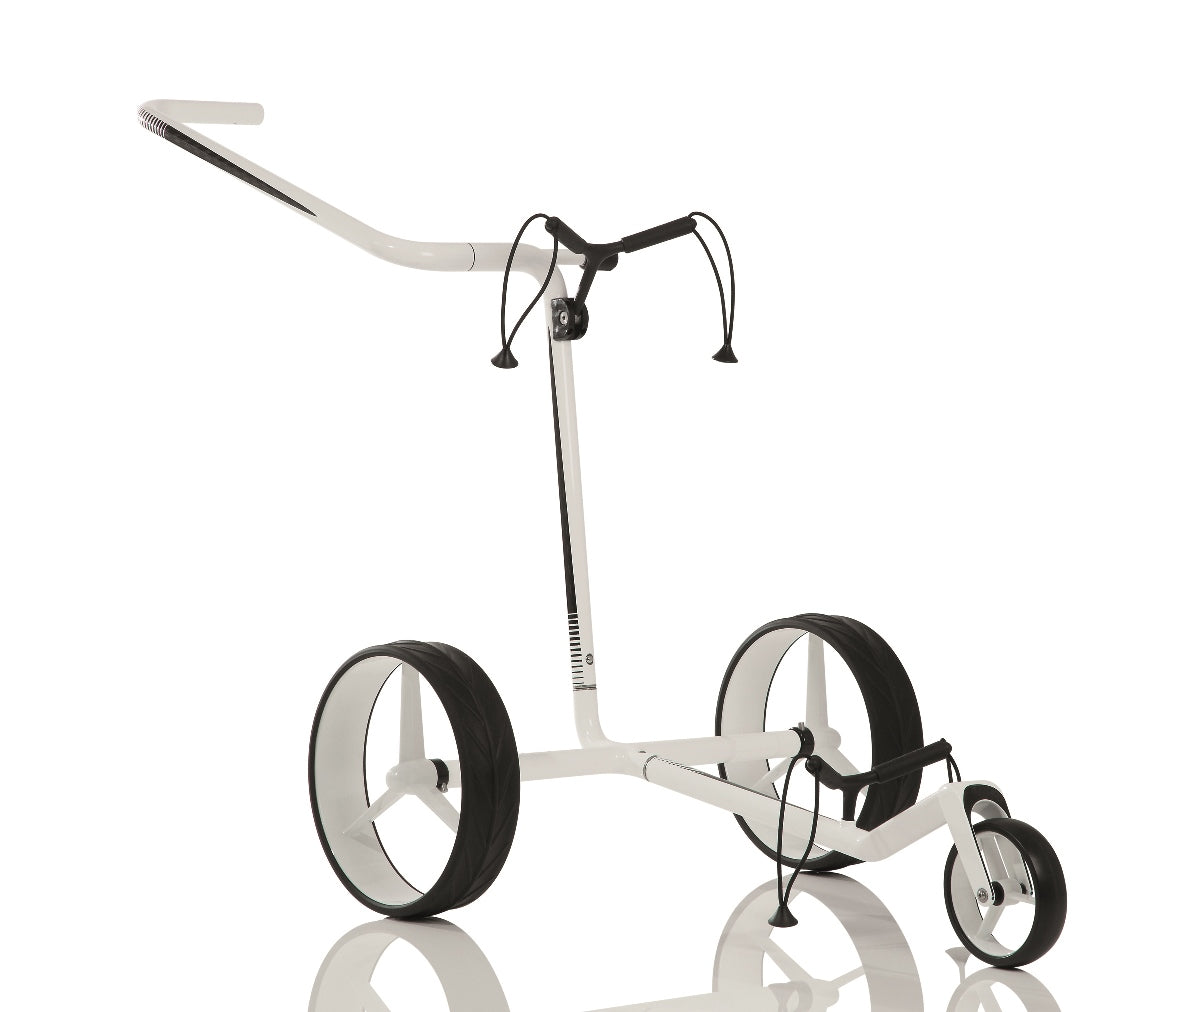 JuCad golf trolley carbon white-black 3 wheels - the modern lightweight